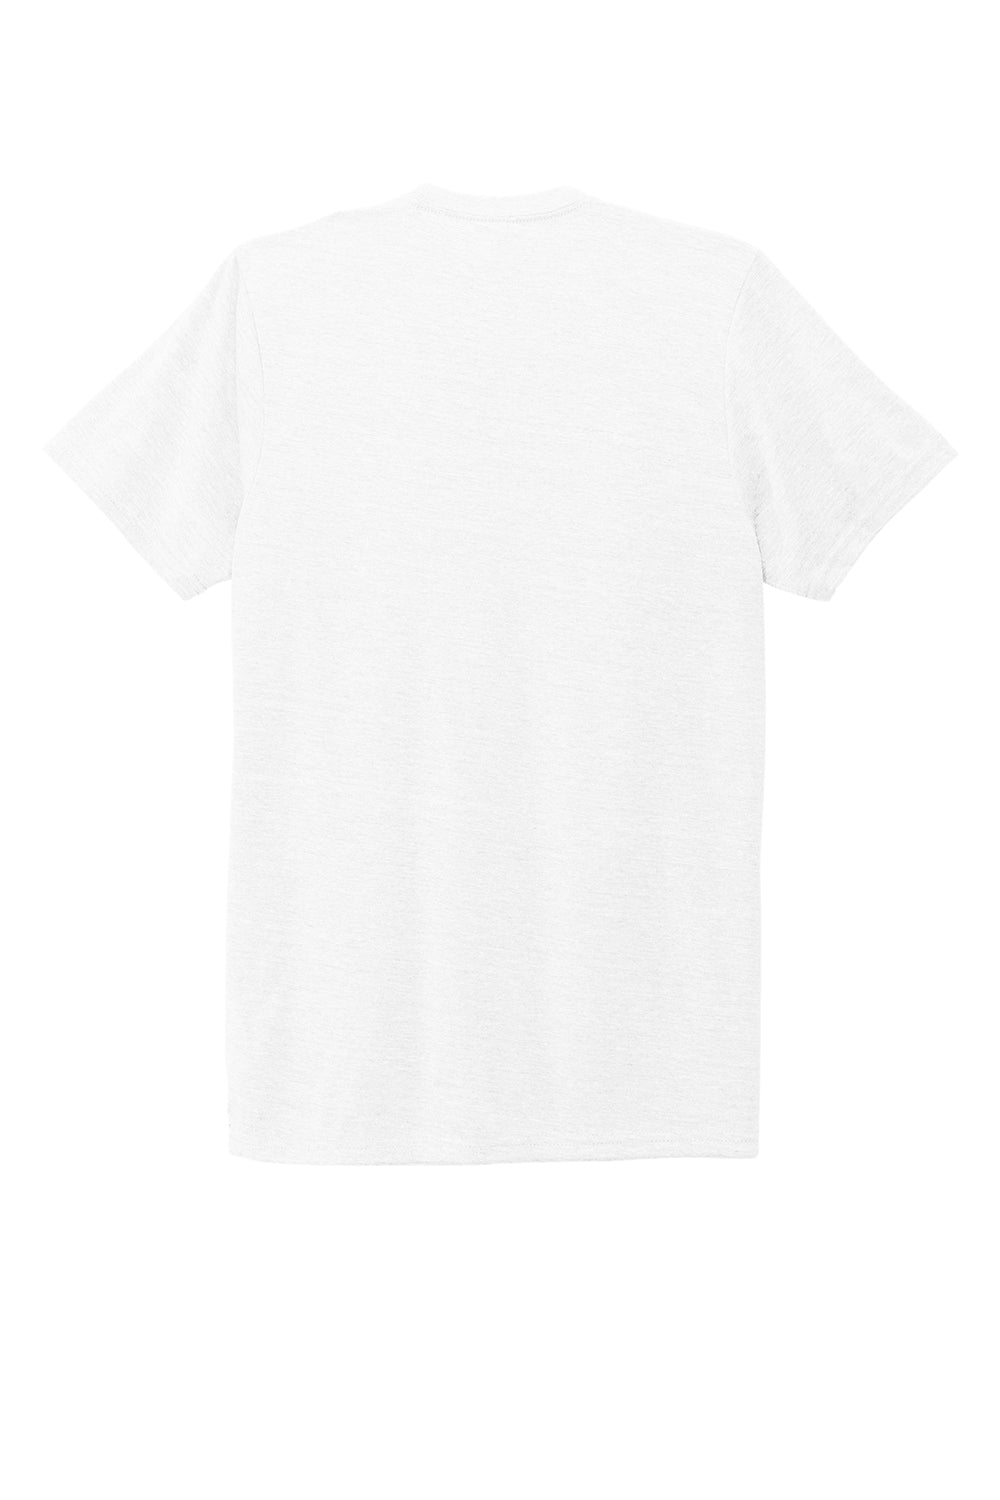 Allmade AL2004 Mens Short Sleeve Crewneck T-Shirt Bright White Flat Back